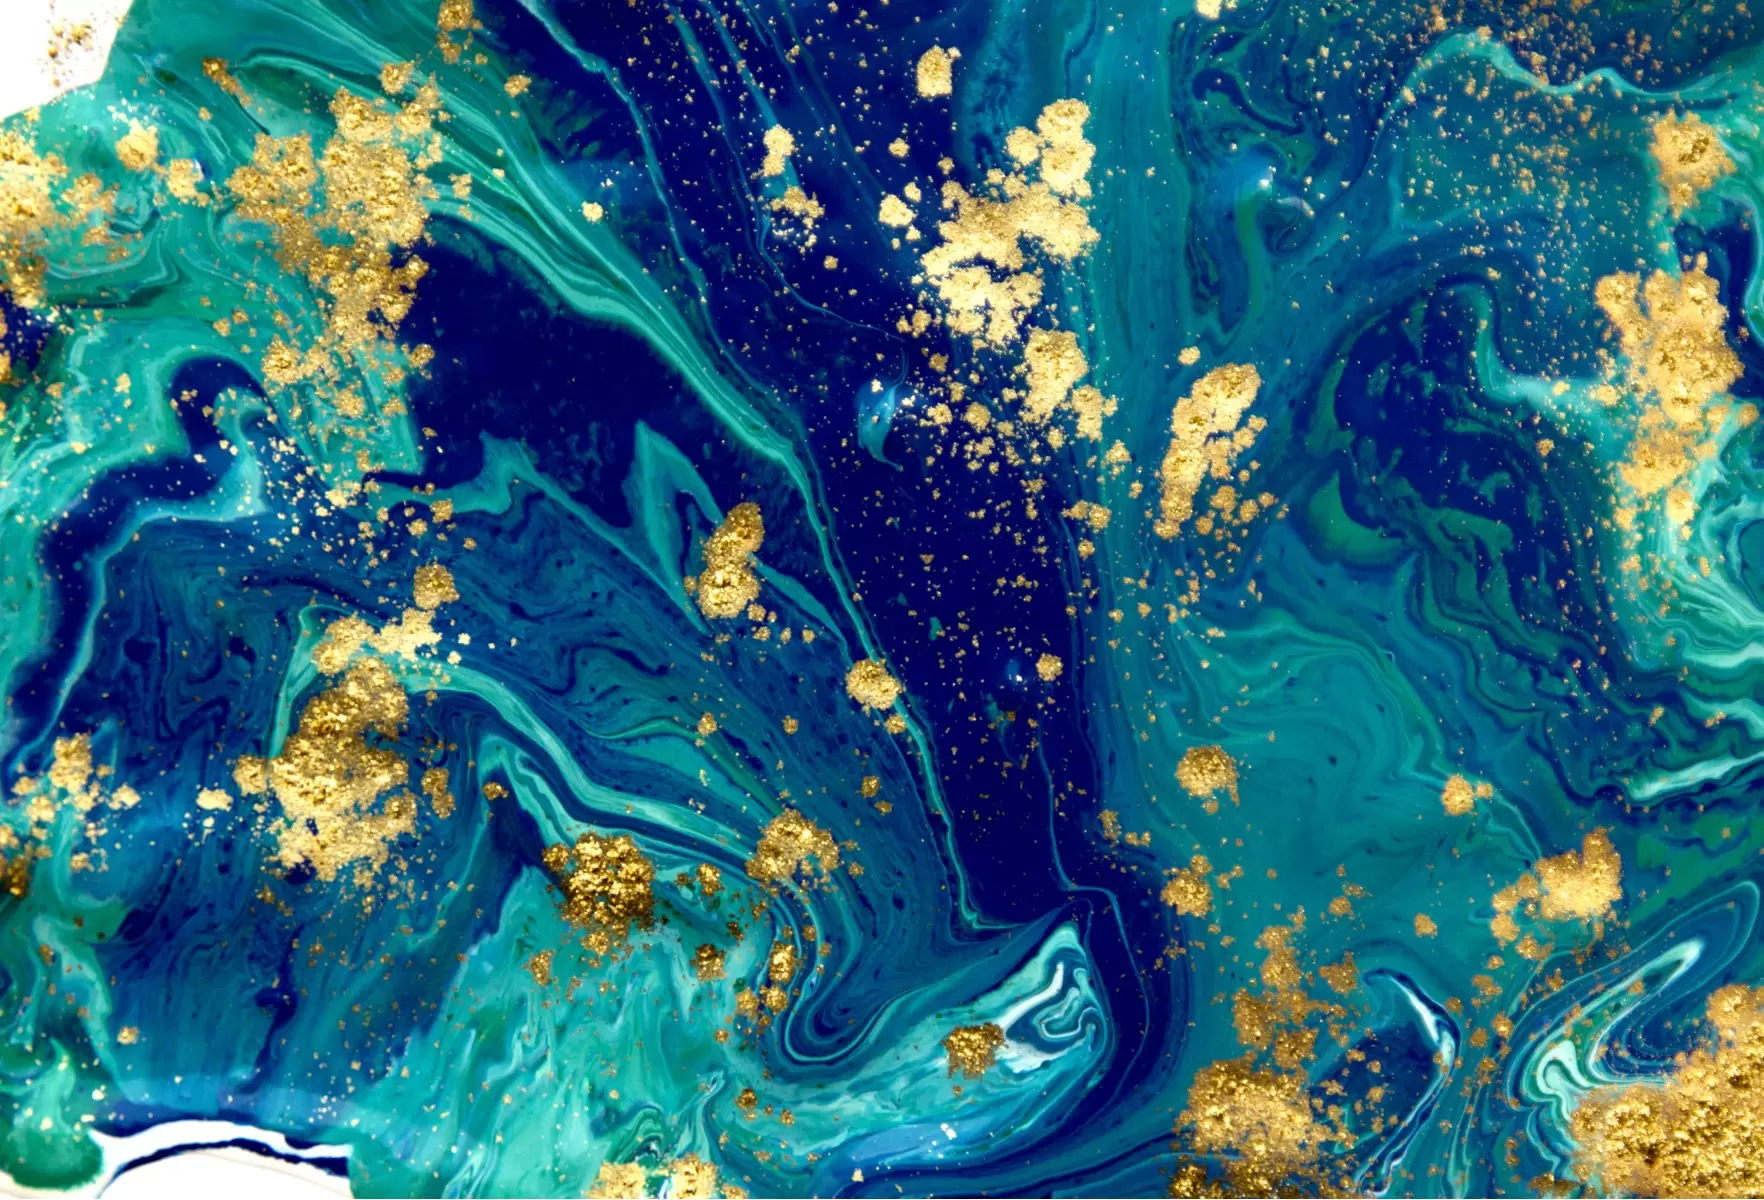 Liquid dream - Artpicked - תמונות בועות גלים ומים אבסטרקט מודרני  - מק''ט: 331021